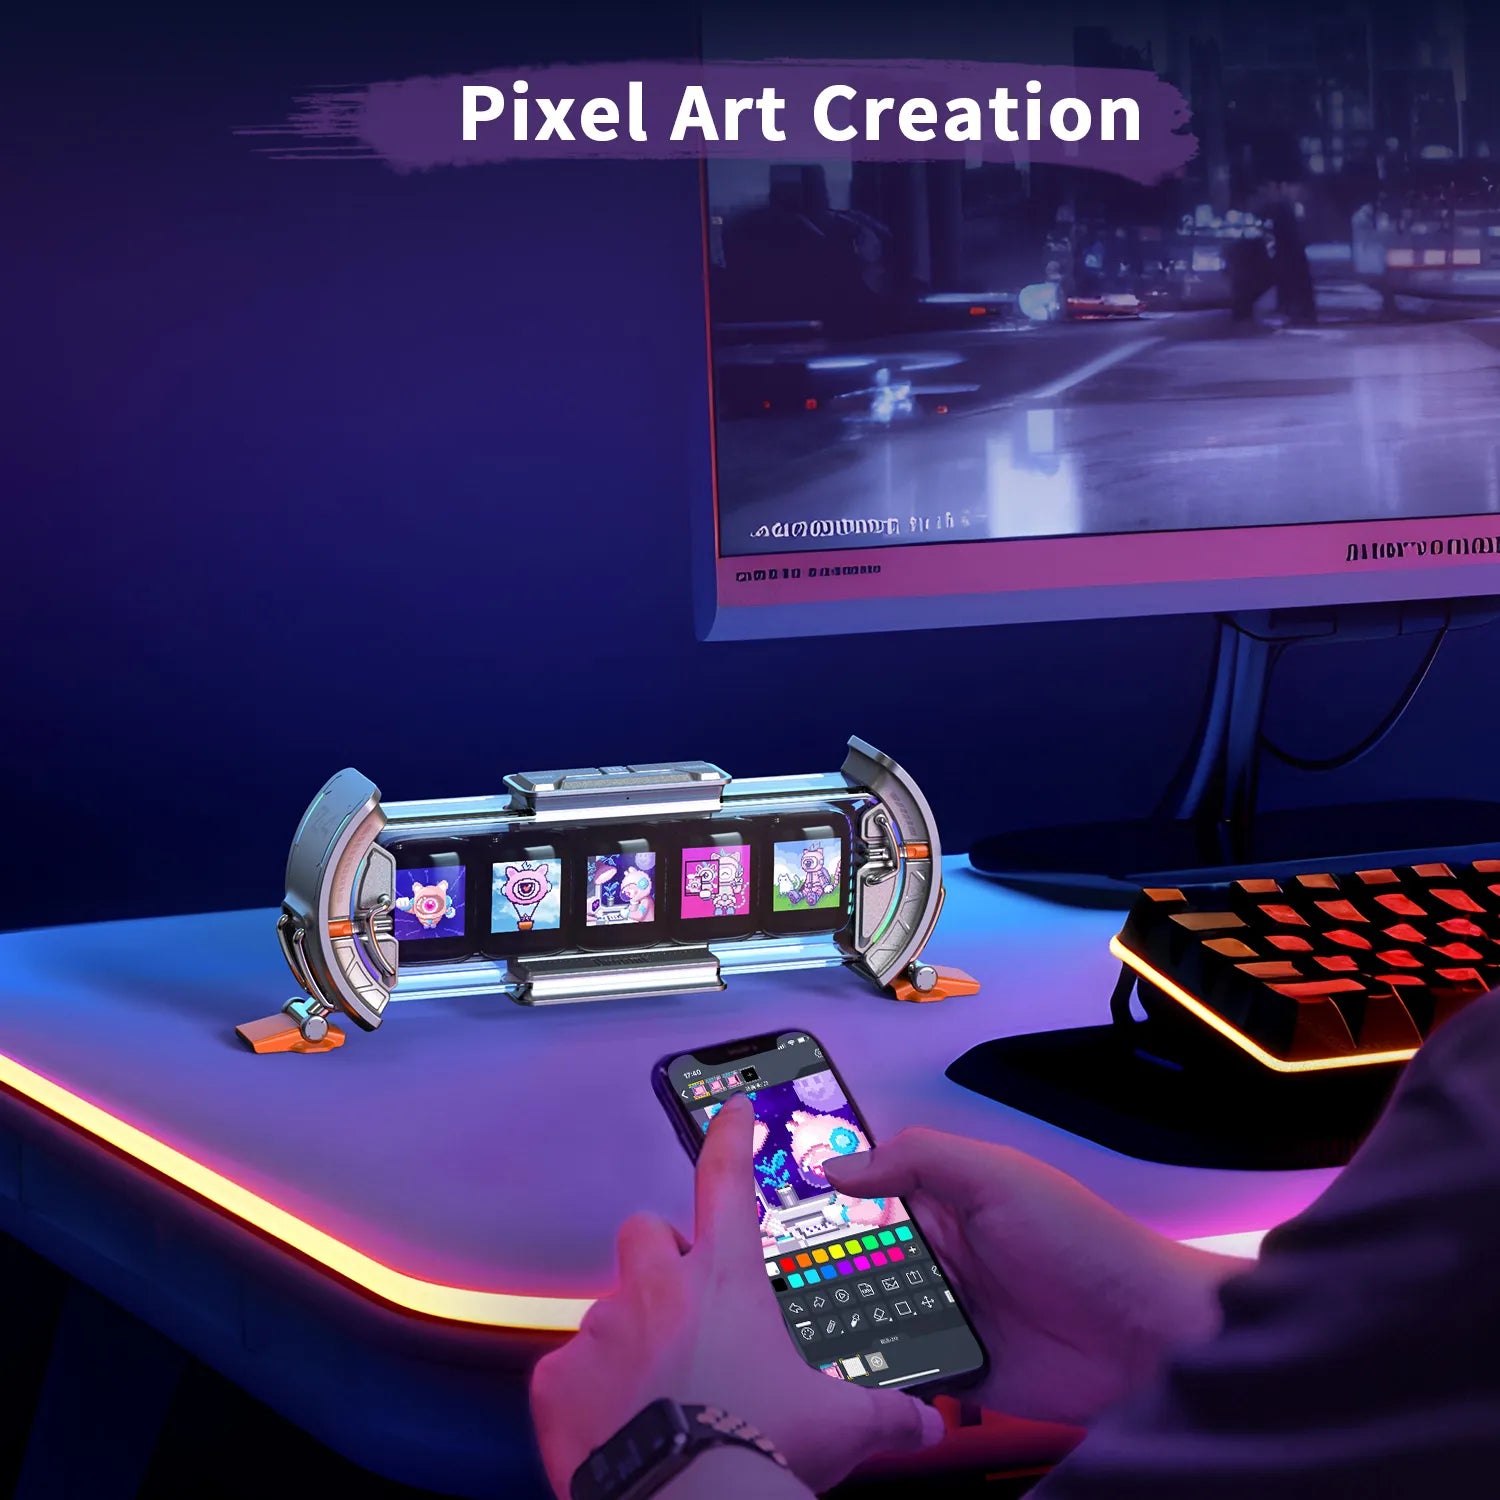 New Divoom Times Gate Pixel Art Gaming Setup Clock with Smart App Control, 128x128 IPS Screen Display - A1Smartstore®